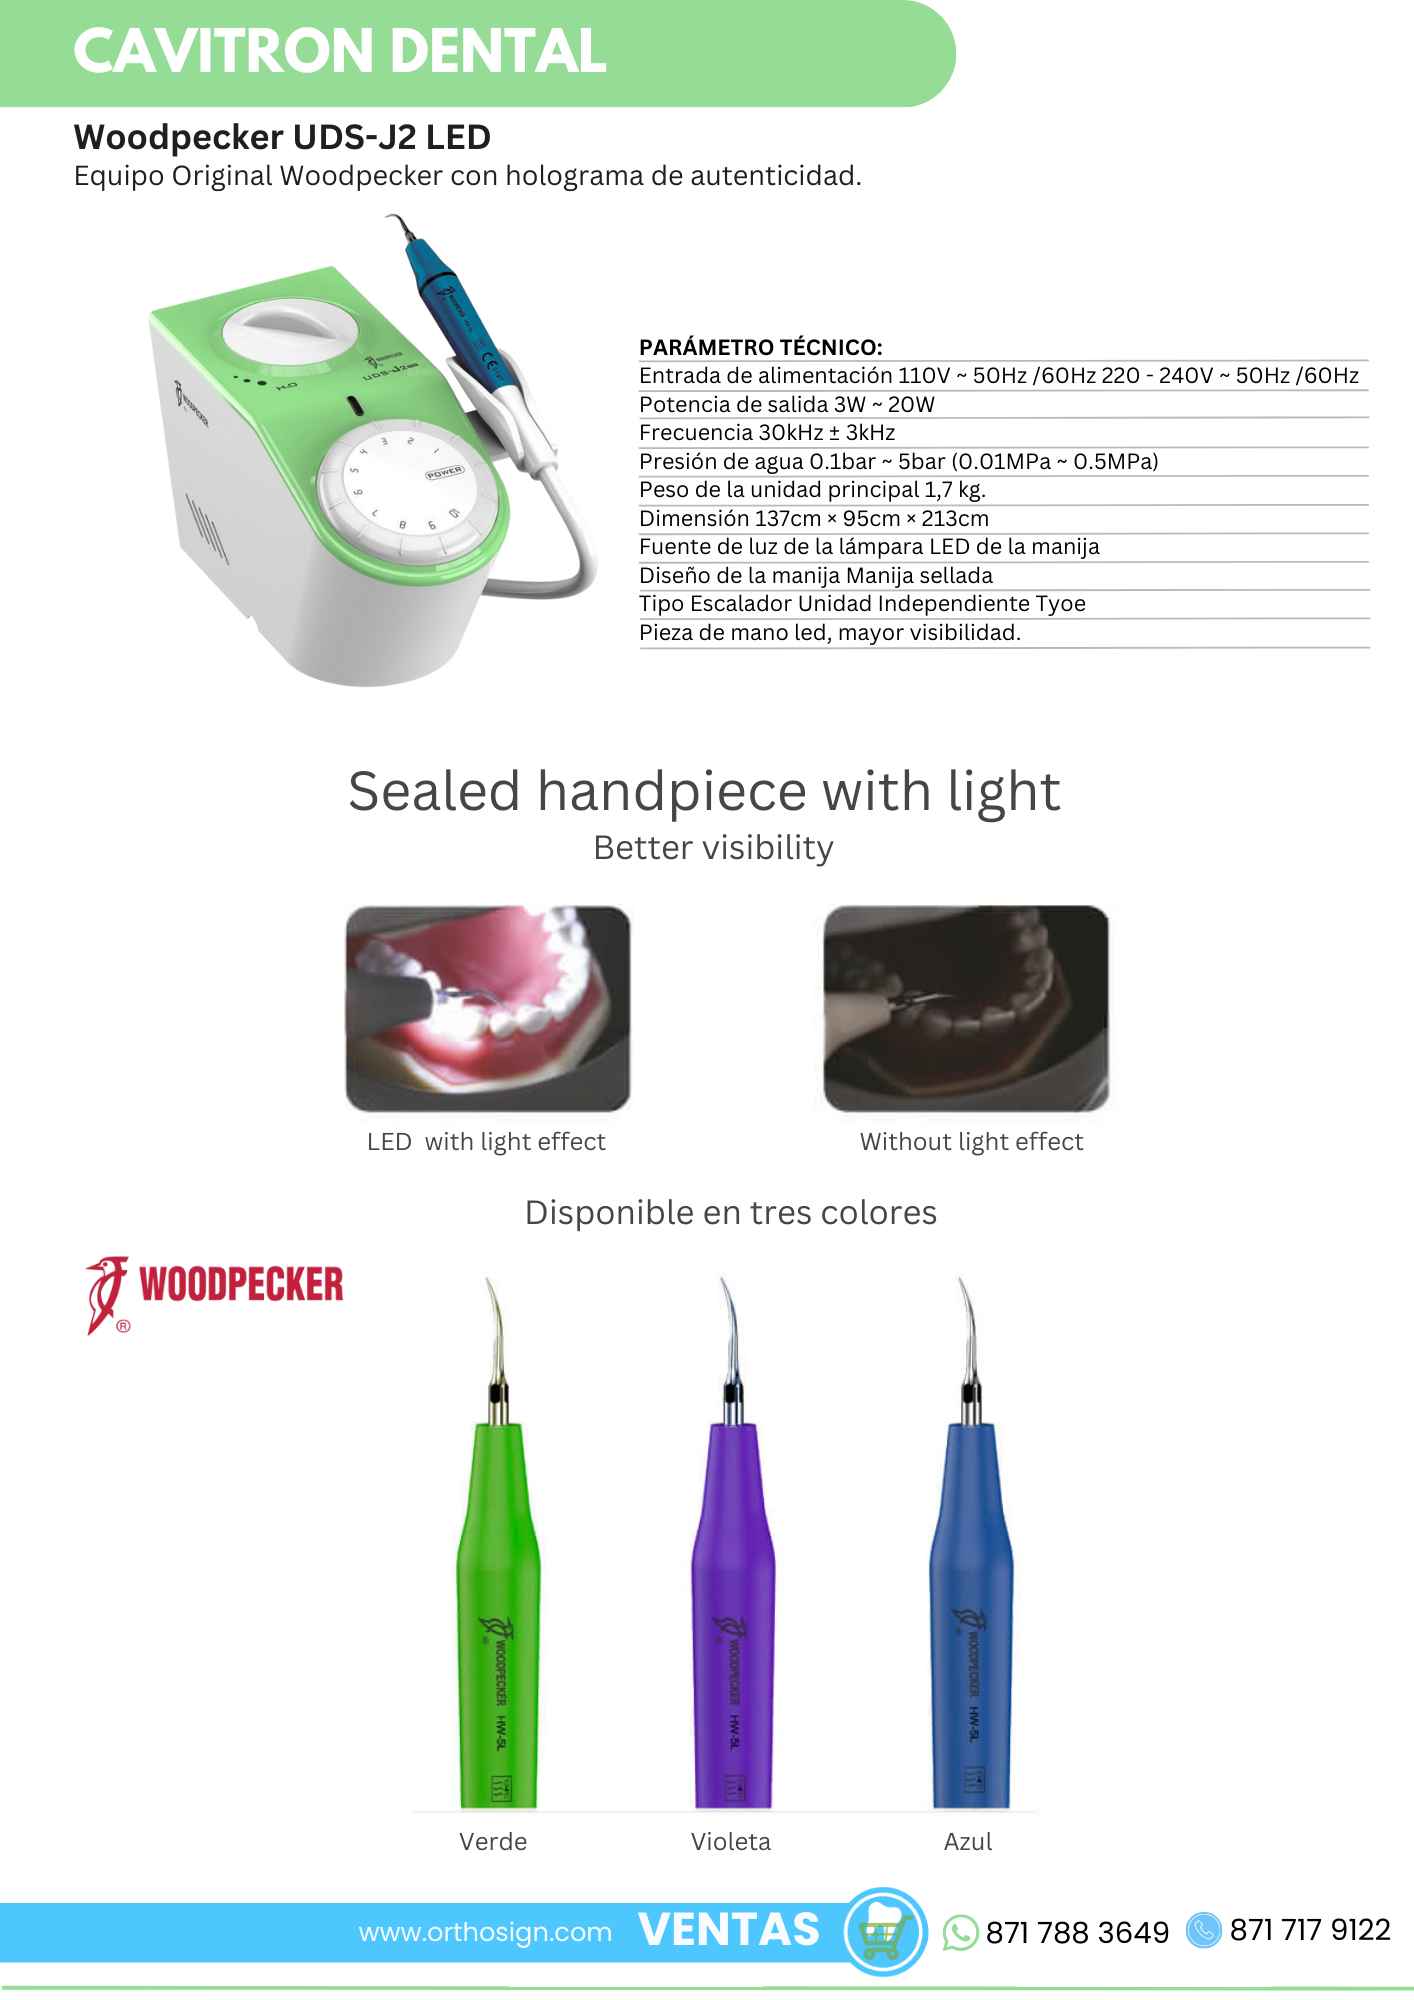 Cavitrón Dental  Woodpecker UDS-J2 LED Orthosign